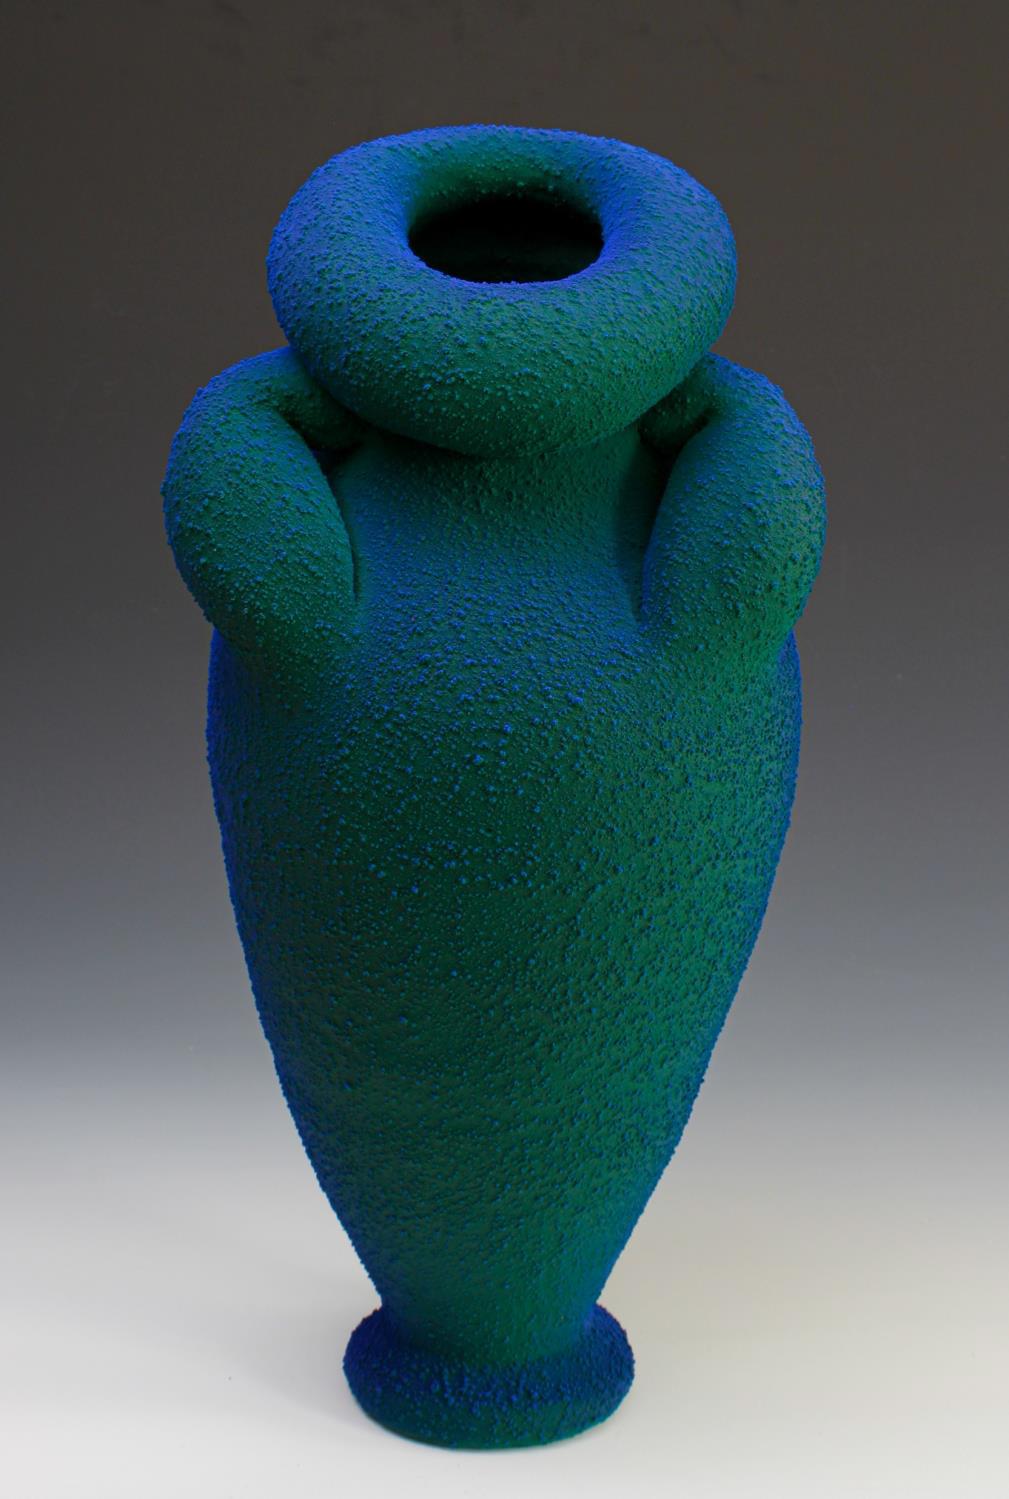 Abstract Sculpture Maxwell Mustardo - « Green & Blue 08 », sculpture en céramique mixte avec surface floquée de PVC